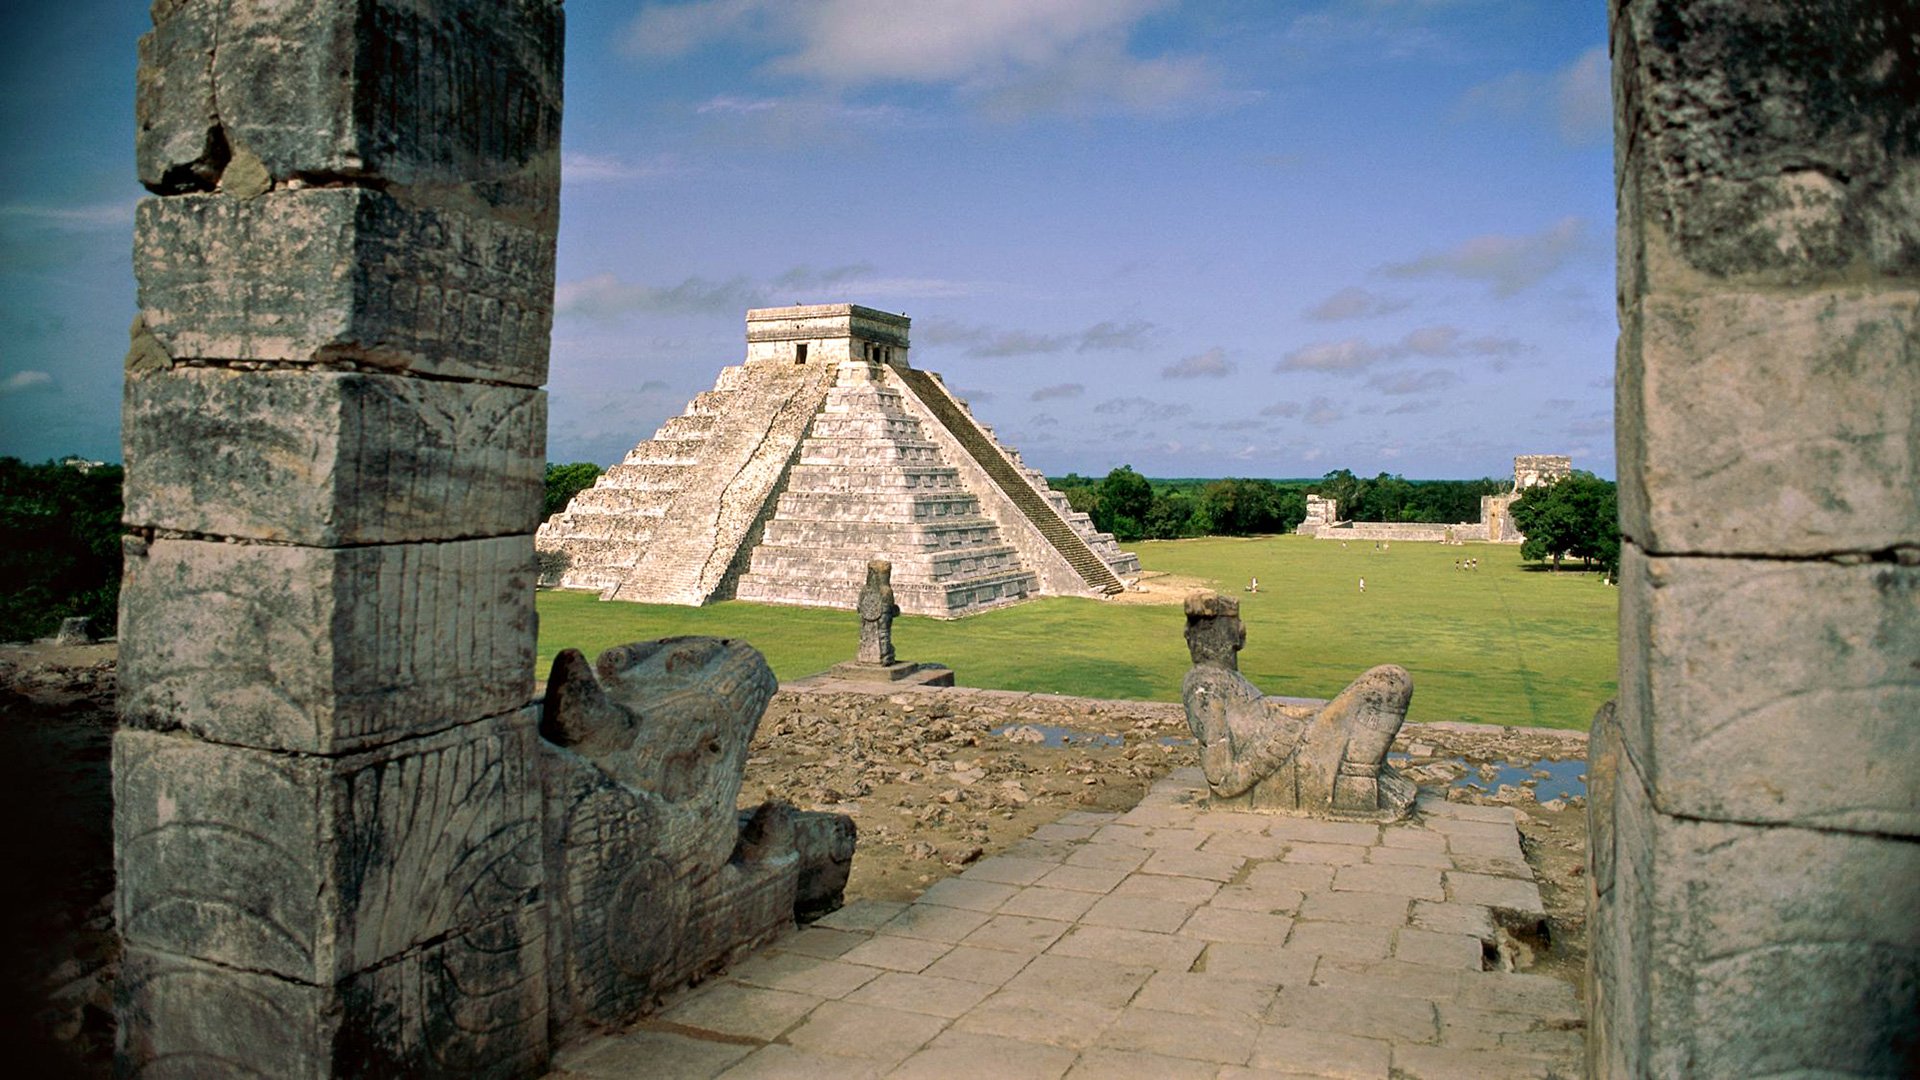 Природные объекты мексики. Пирамида Эль-Кастильо (пирамида Кукулькана), Чичен-ица, Мексика. Древний город Чичен-ица, Мексика. Чичен-ица древний город Майя. Пирамида Эль-Кастильо в Чичен-Ице.